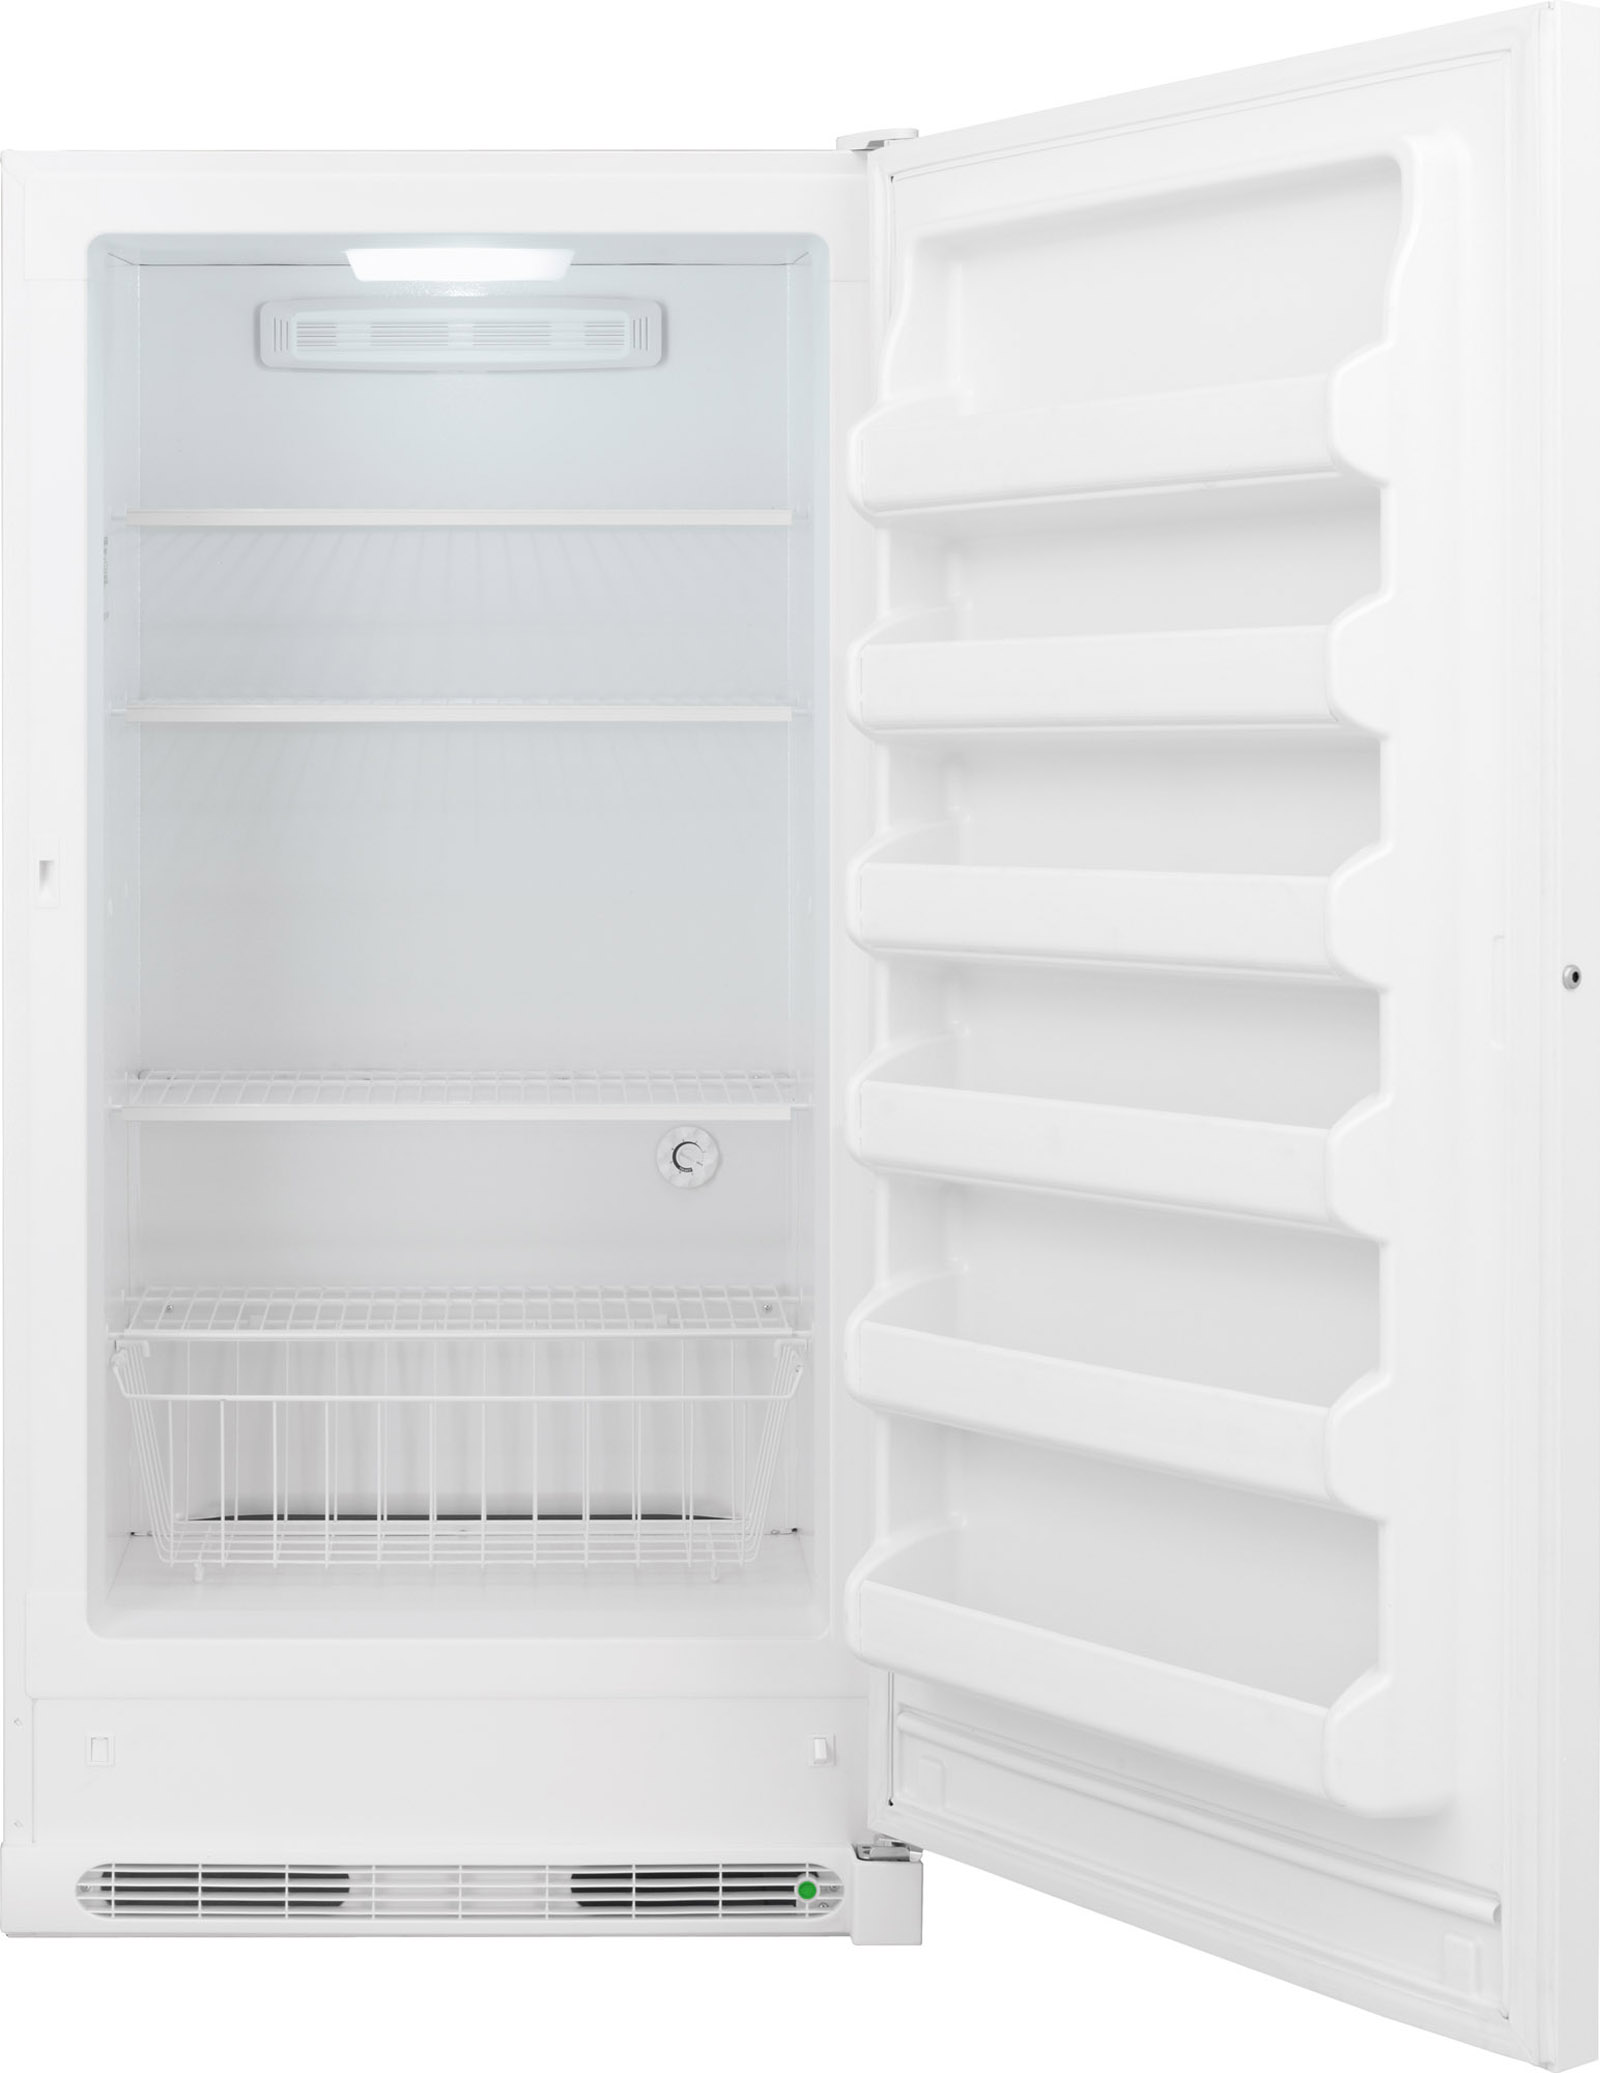 21+ Kenmore heavy duty commercial upright freezer manual ideas in 2021 